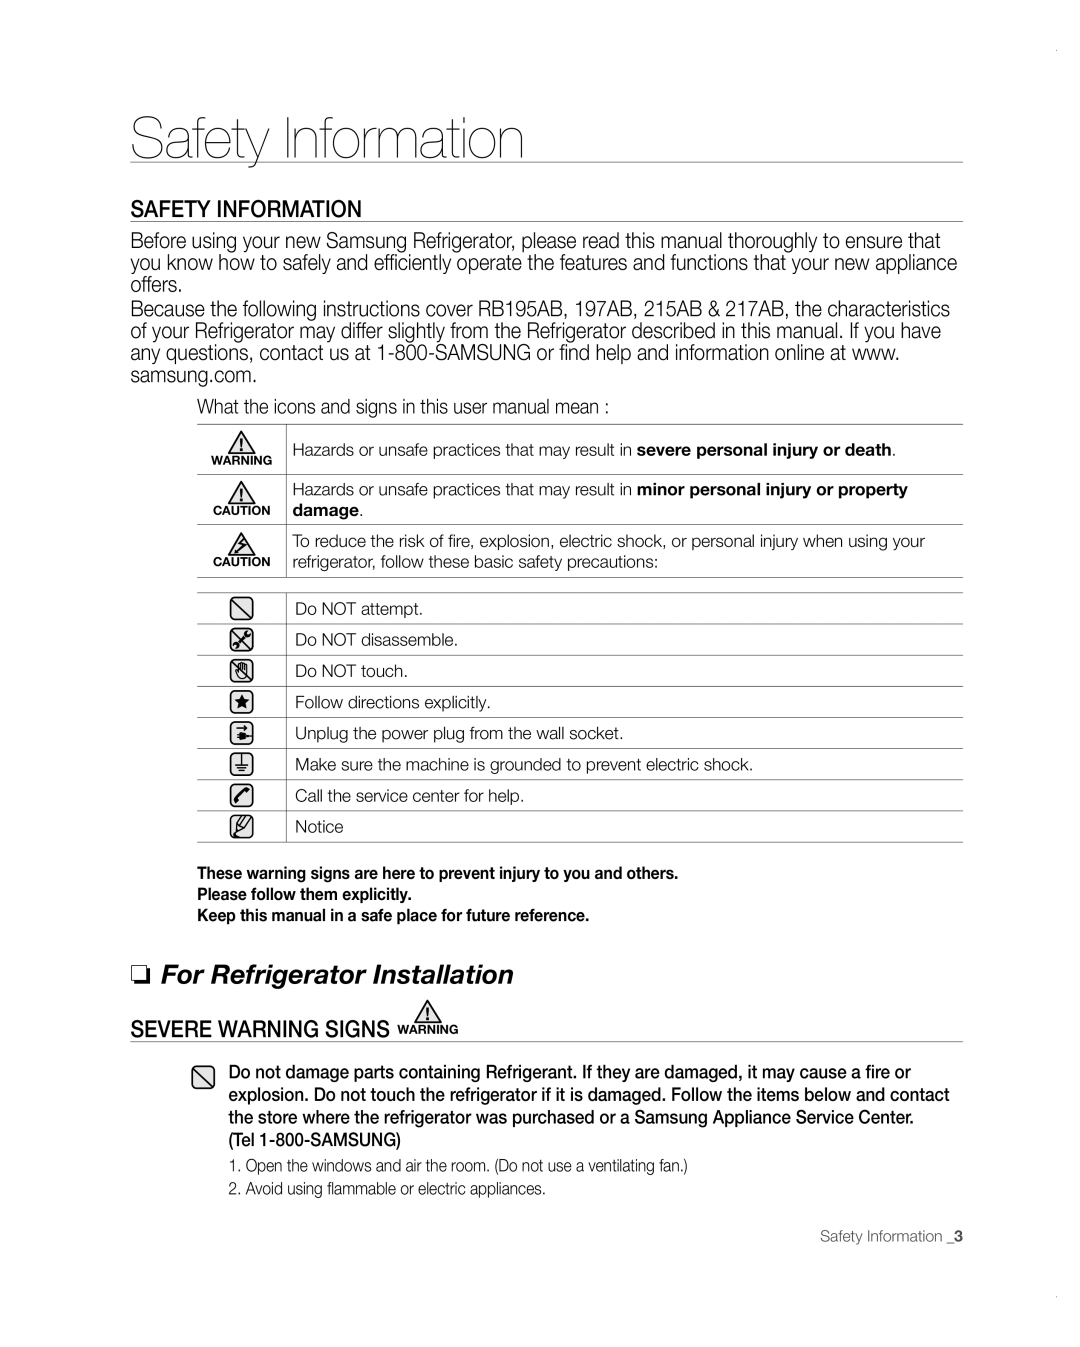 Samsung RB197ABBP user manual Safety Information, For Refrigerator Installation, Severe Warning Signs Warning 